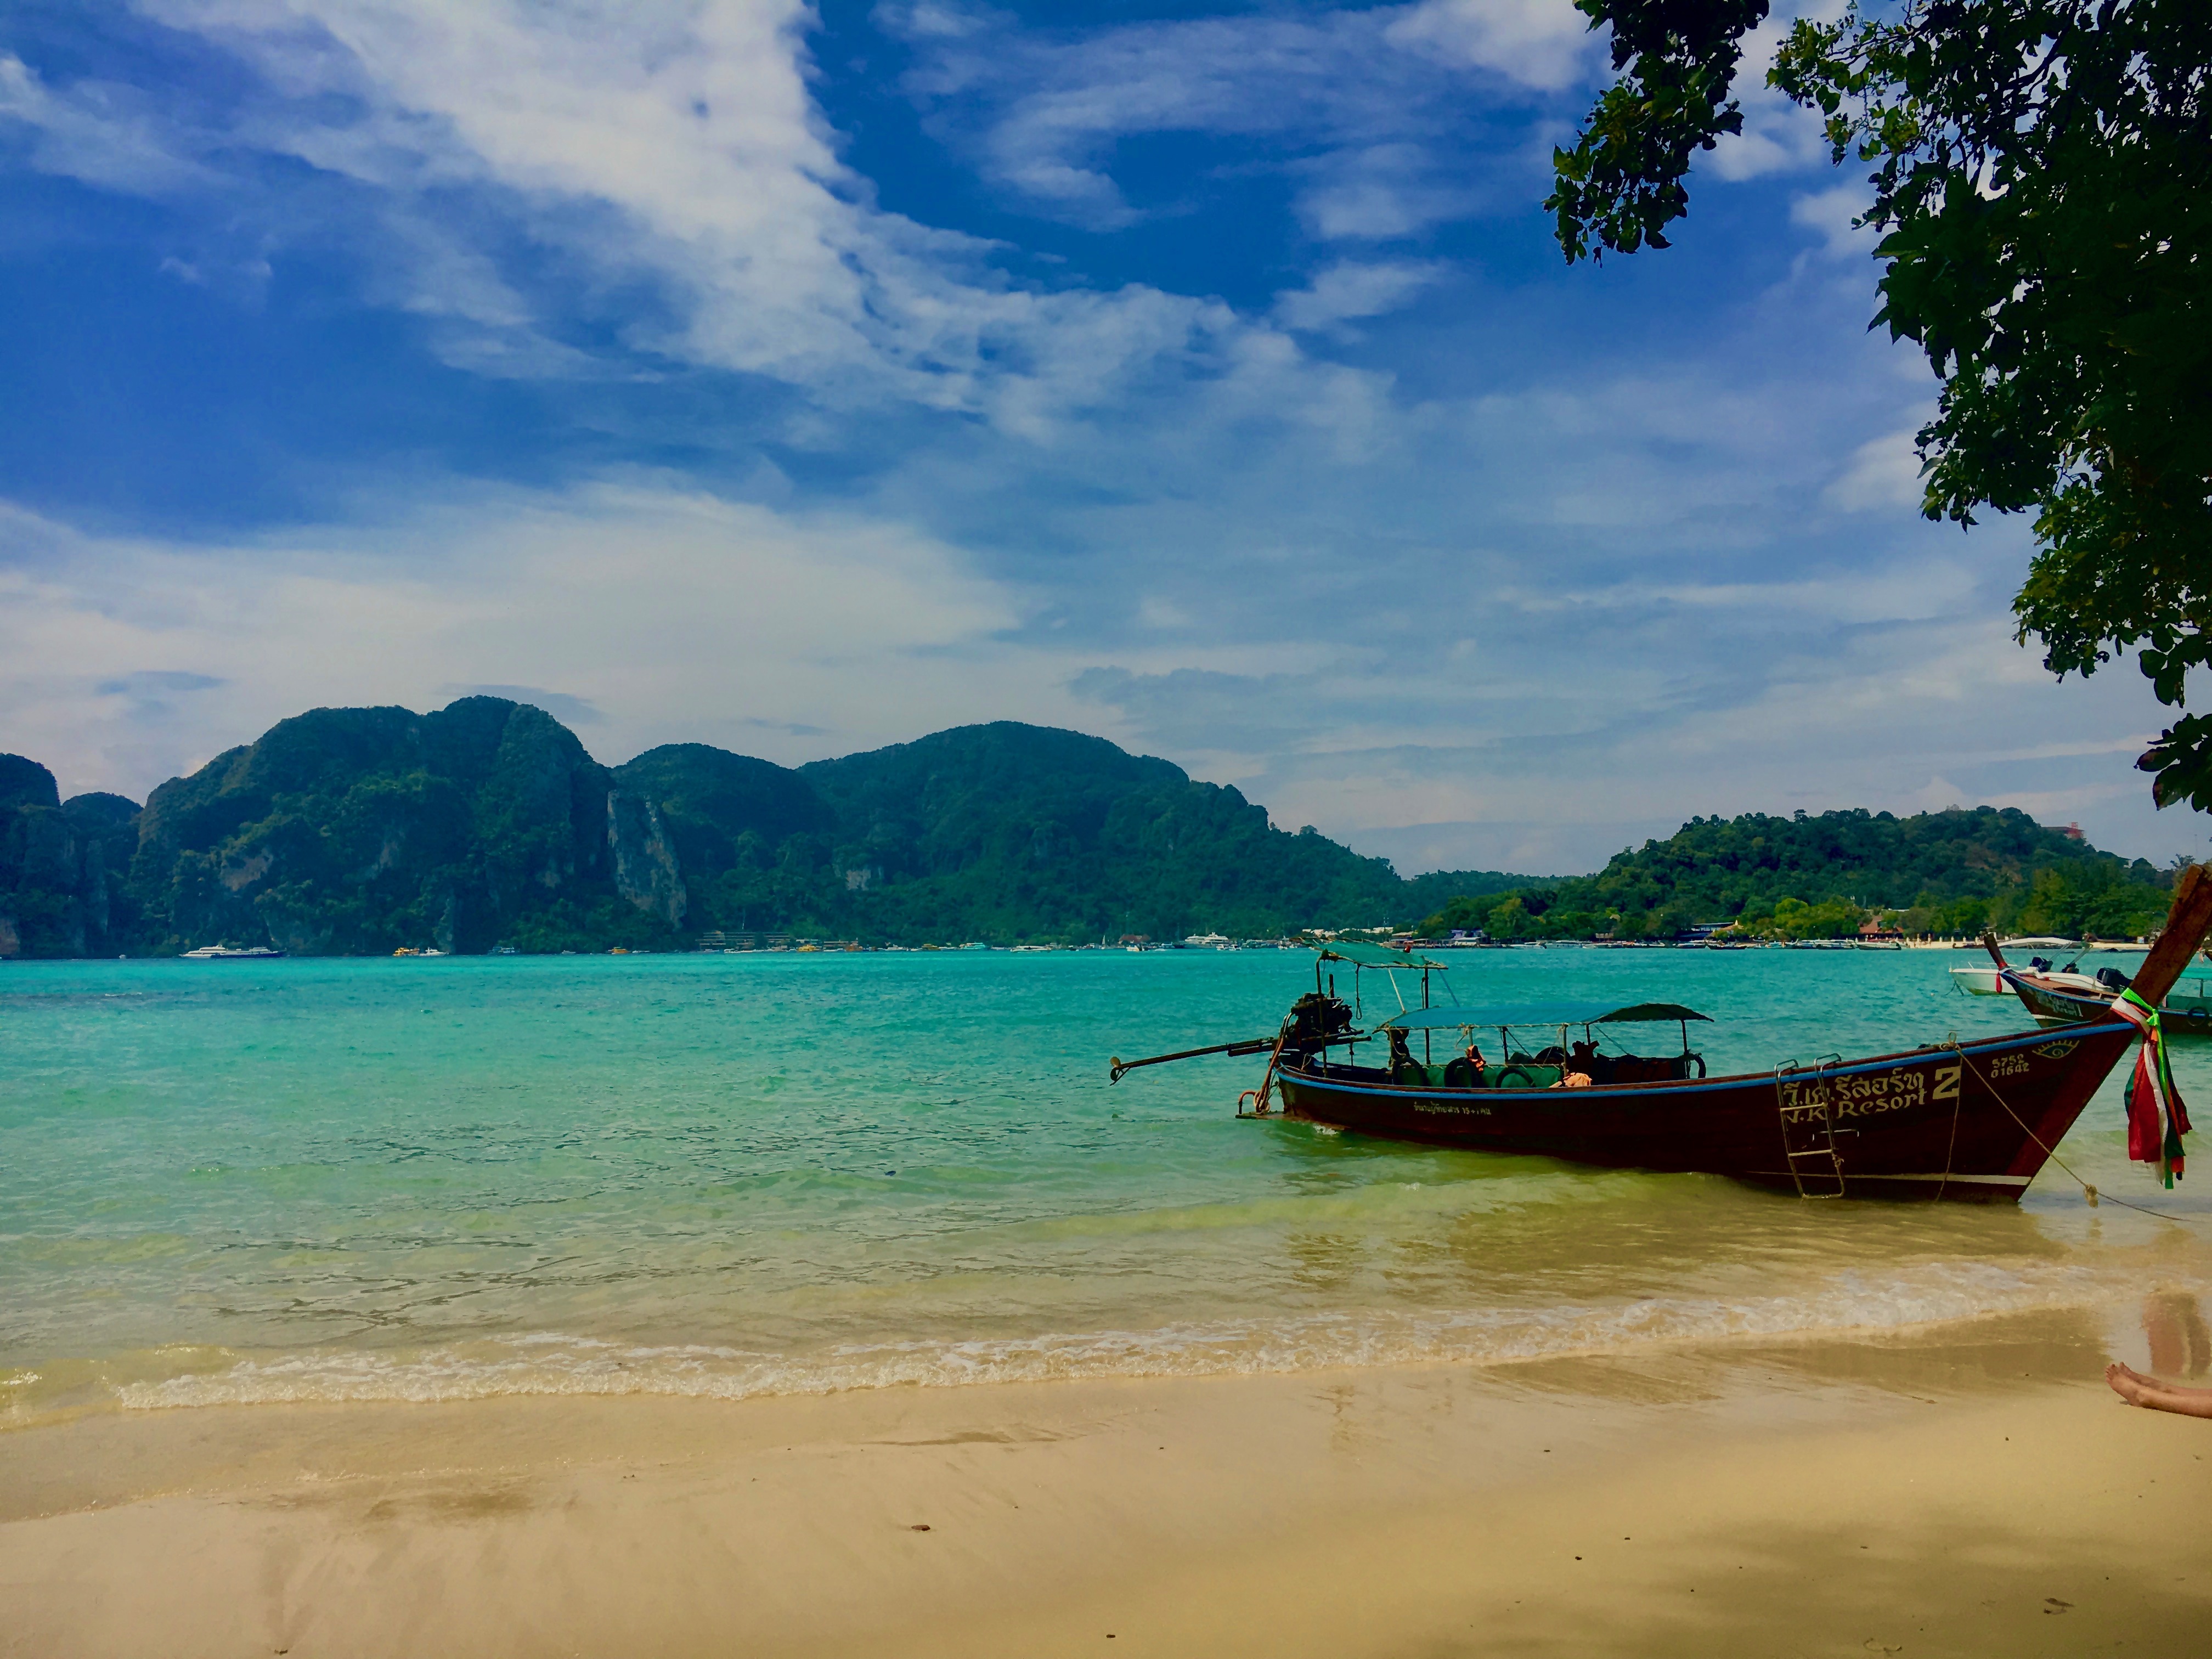 Avoiding the Tourist Trap: How I Found Solitude on Ko Phi Phi